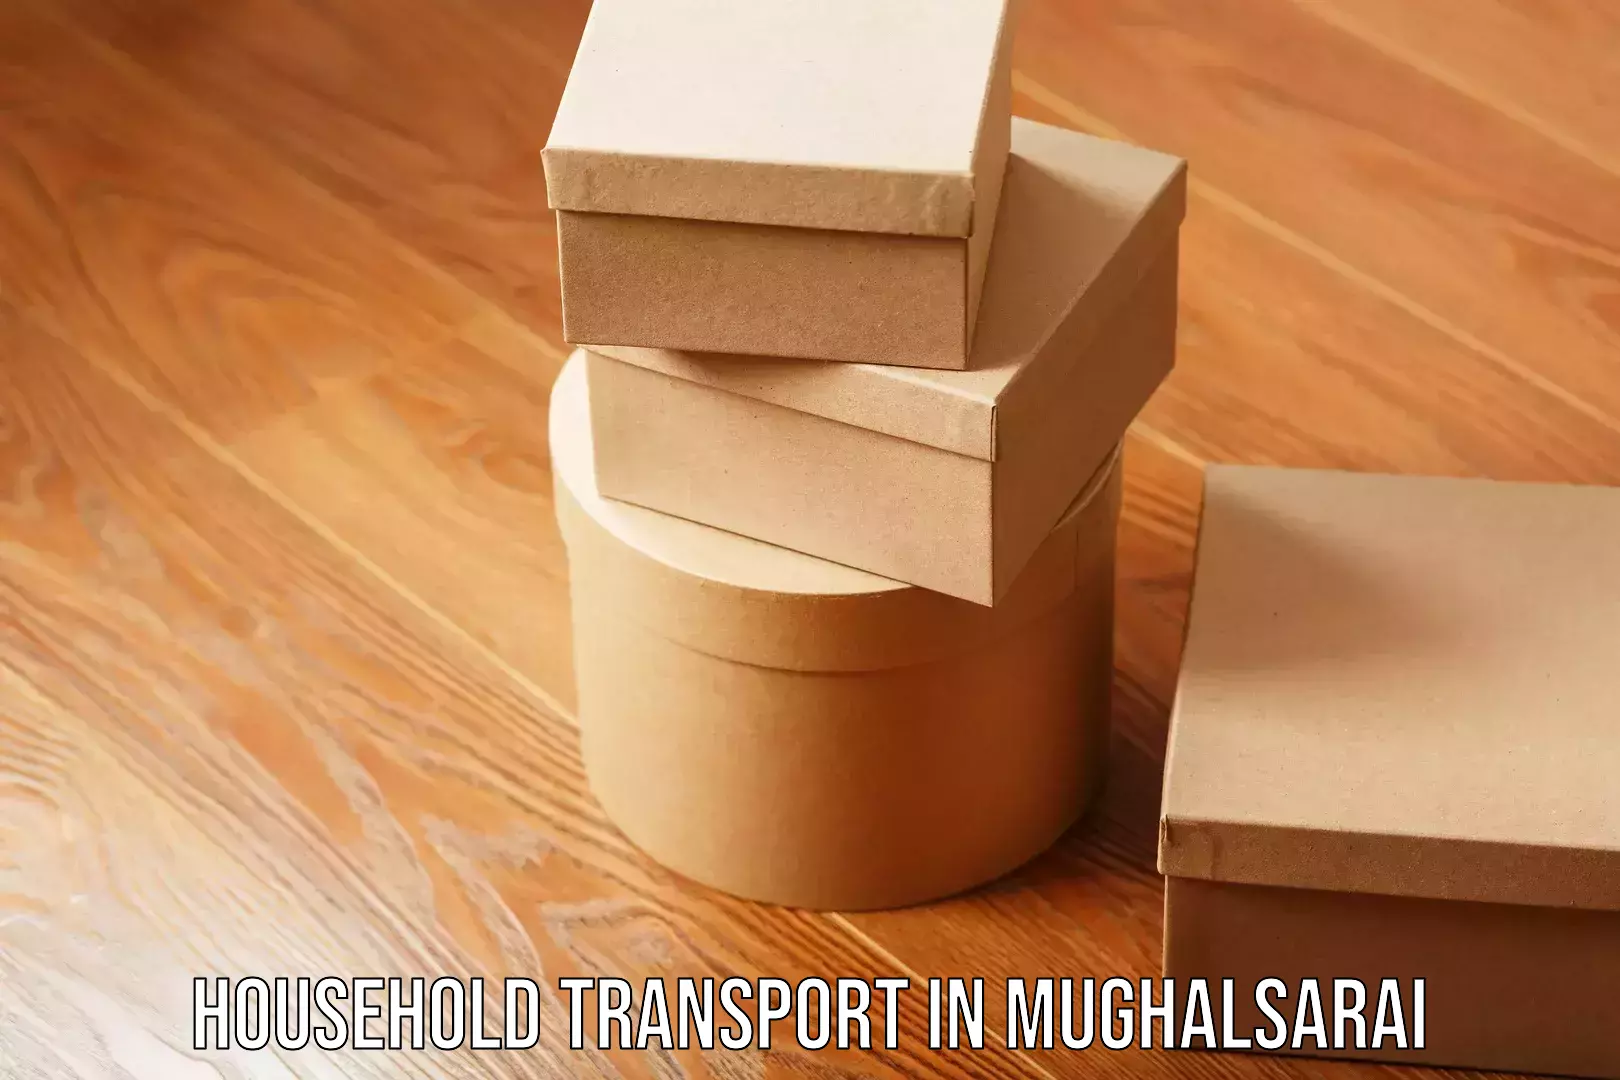 Household goods transporters in Mughalsarai